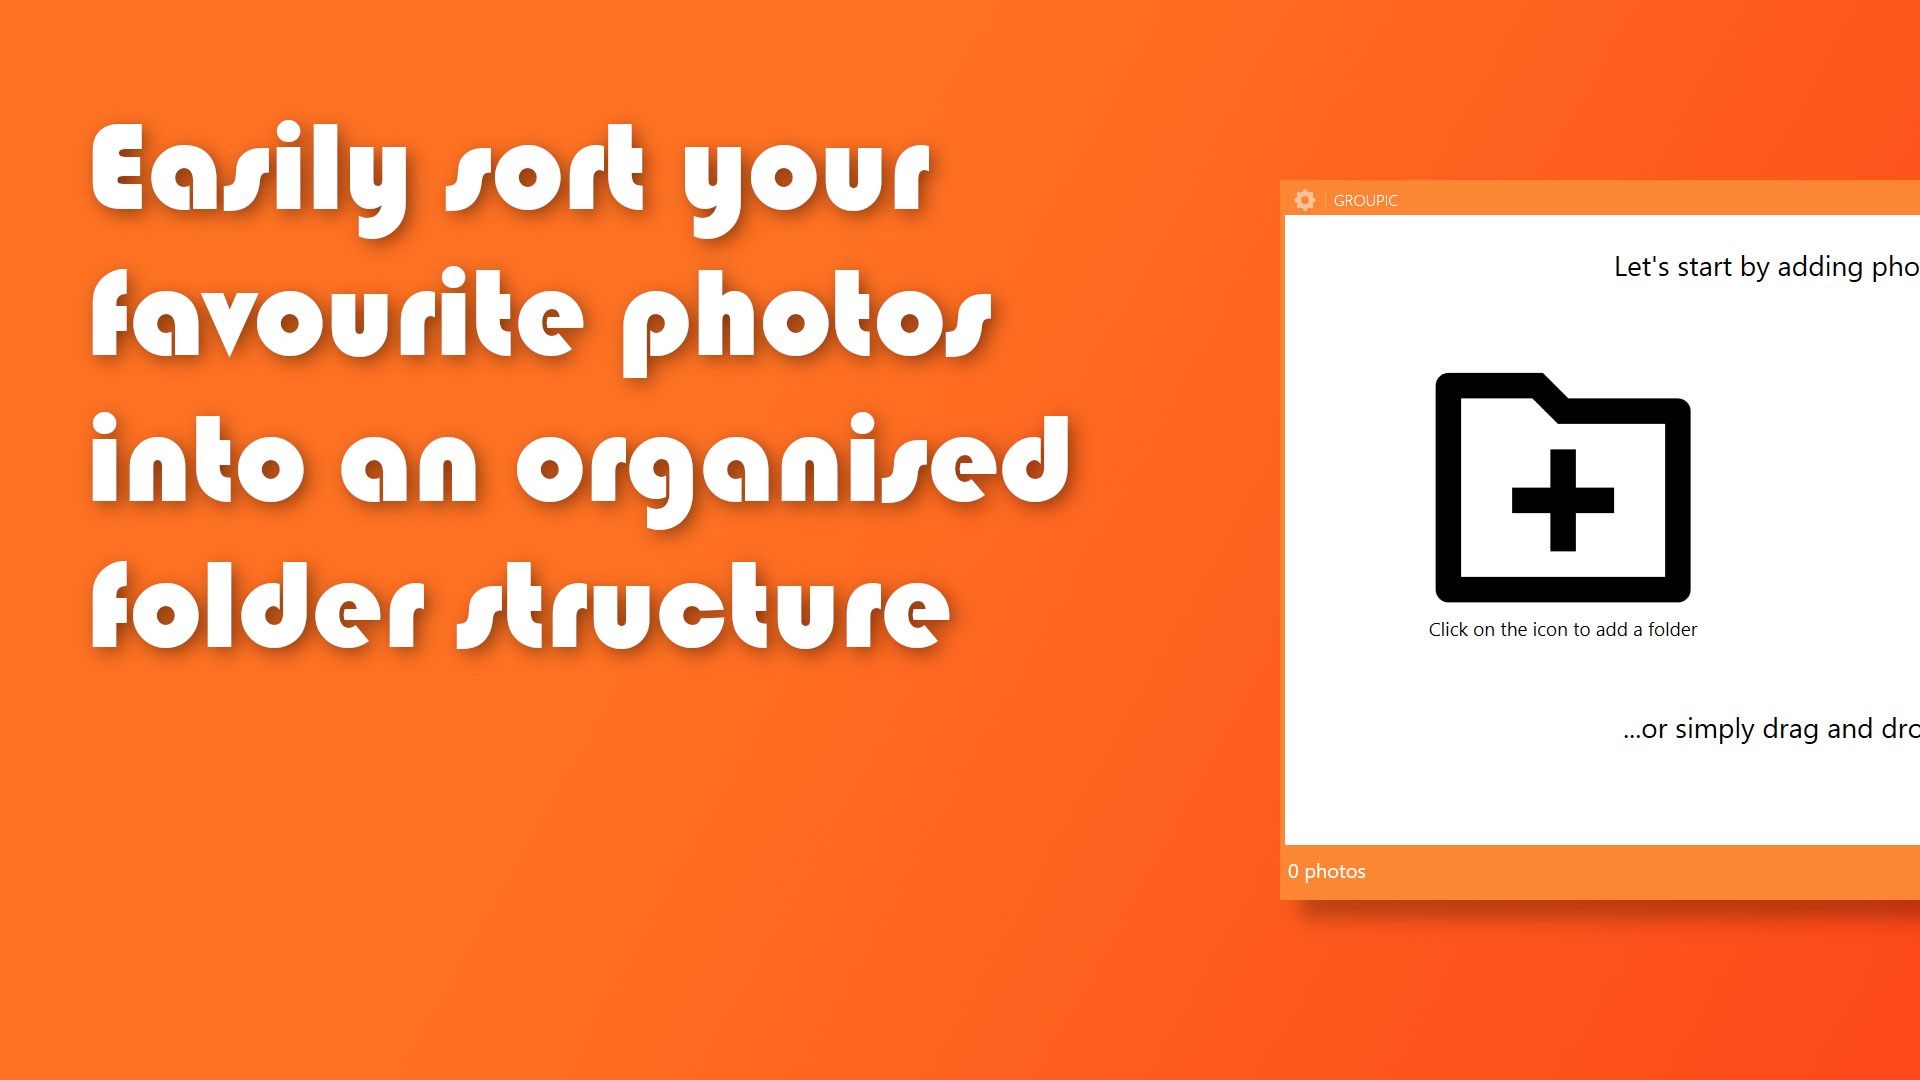 Groupic - Easily sort your photos